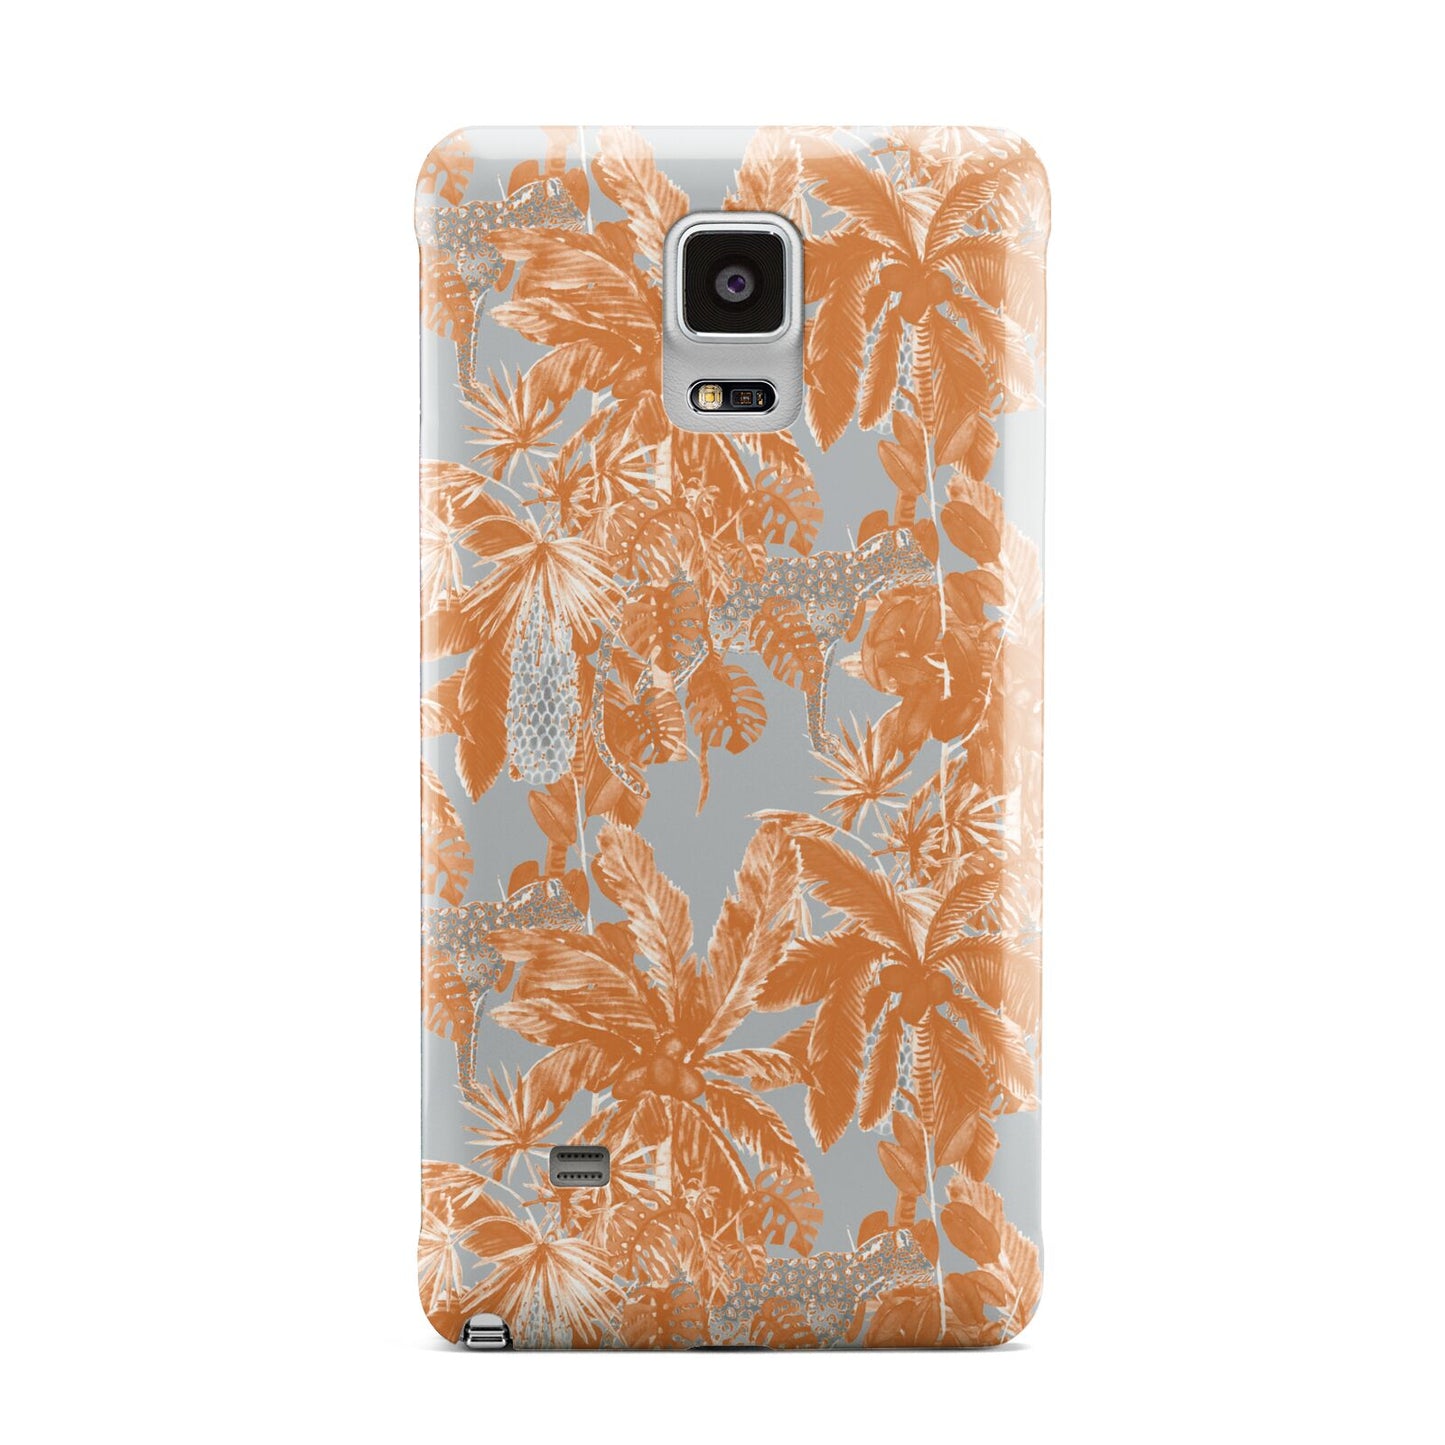 Tropical Samsung Galaxy Note 4 Case